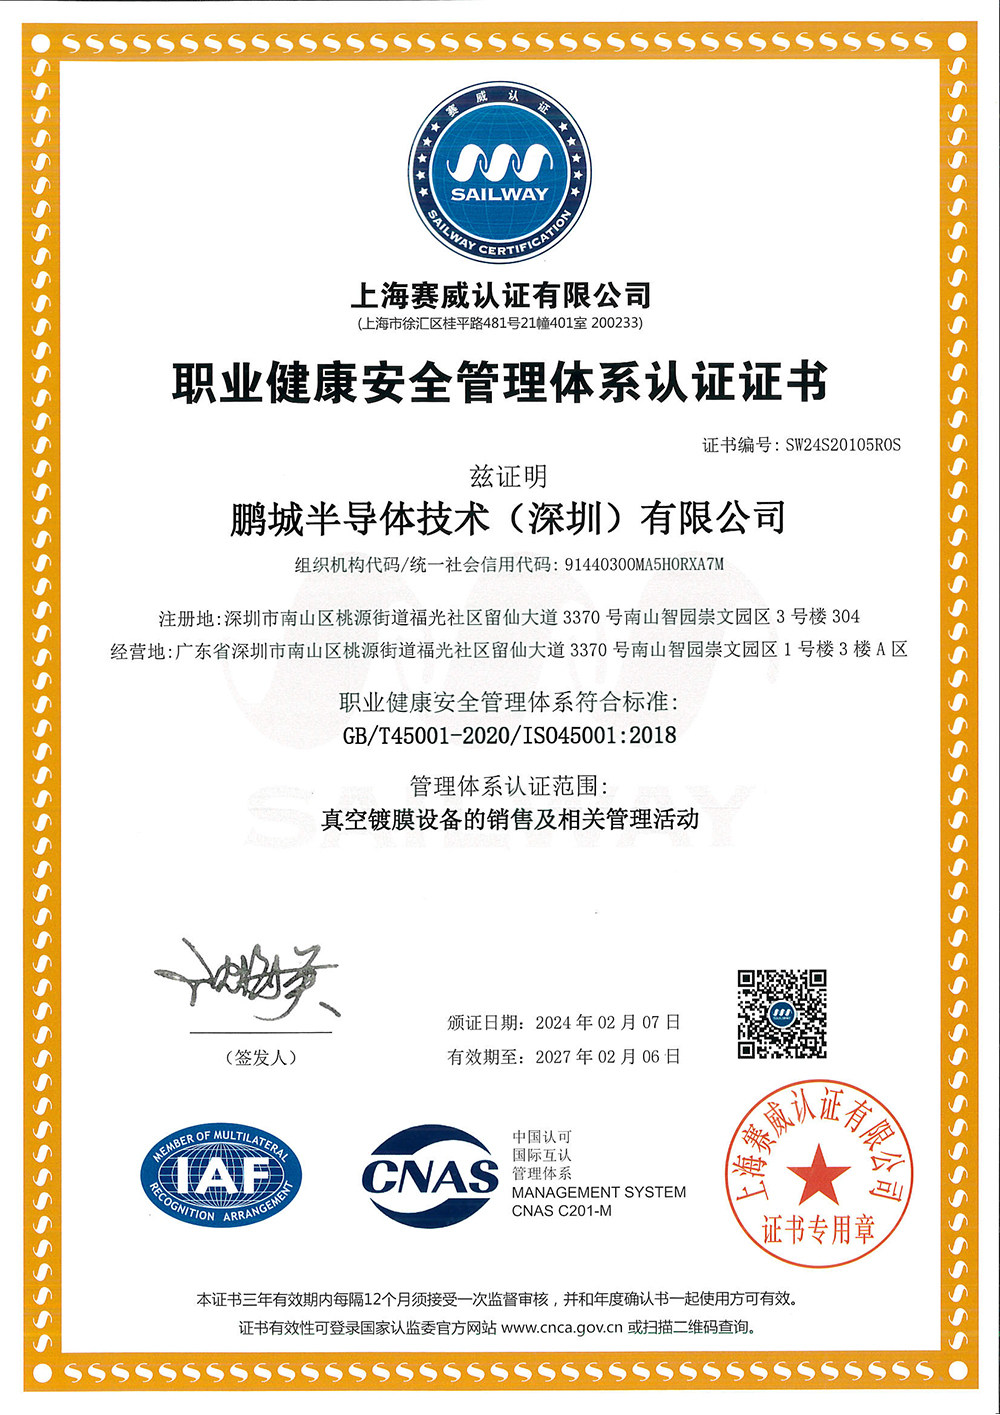 ISO45001 职业健康安全管理体系认证证书